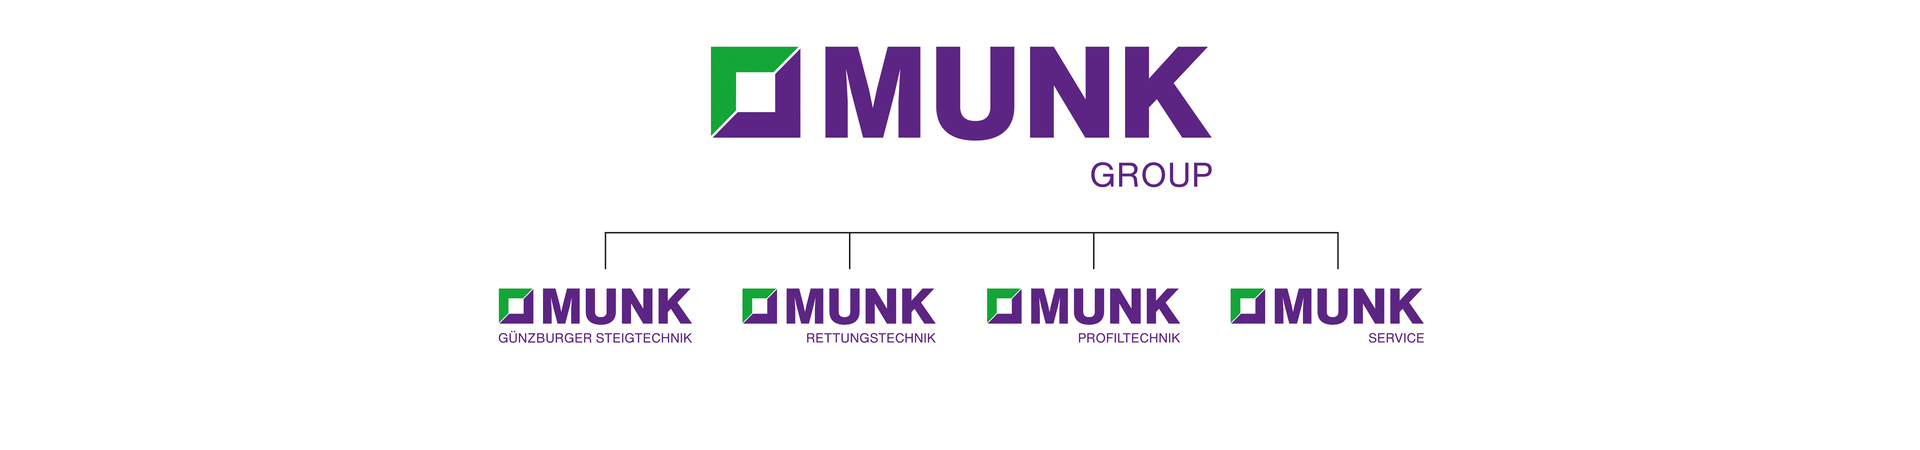 MUNK Group: Corporate structure | © MUNK GmbH